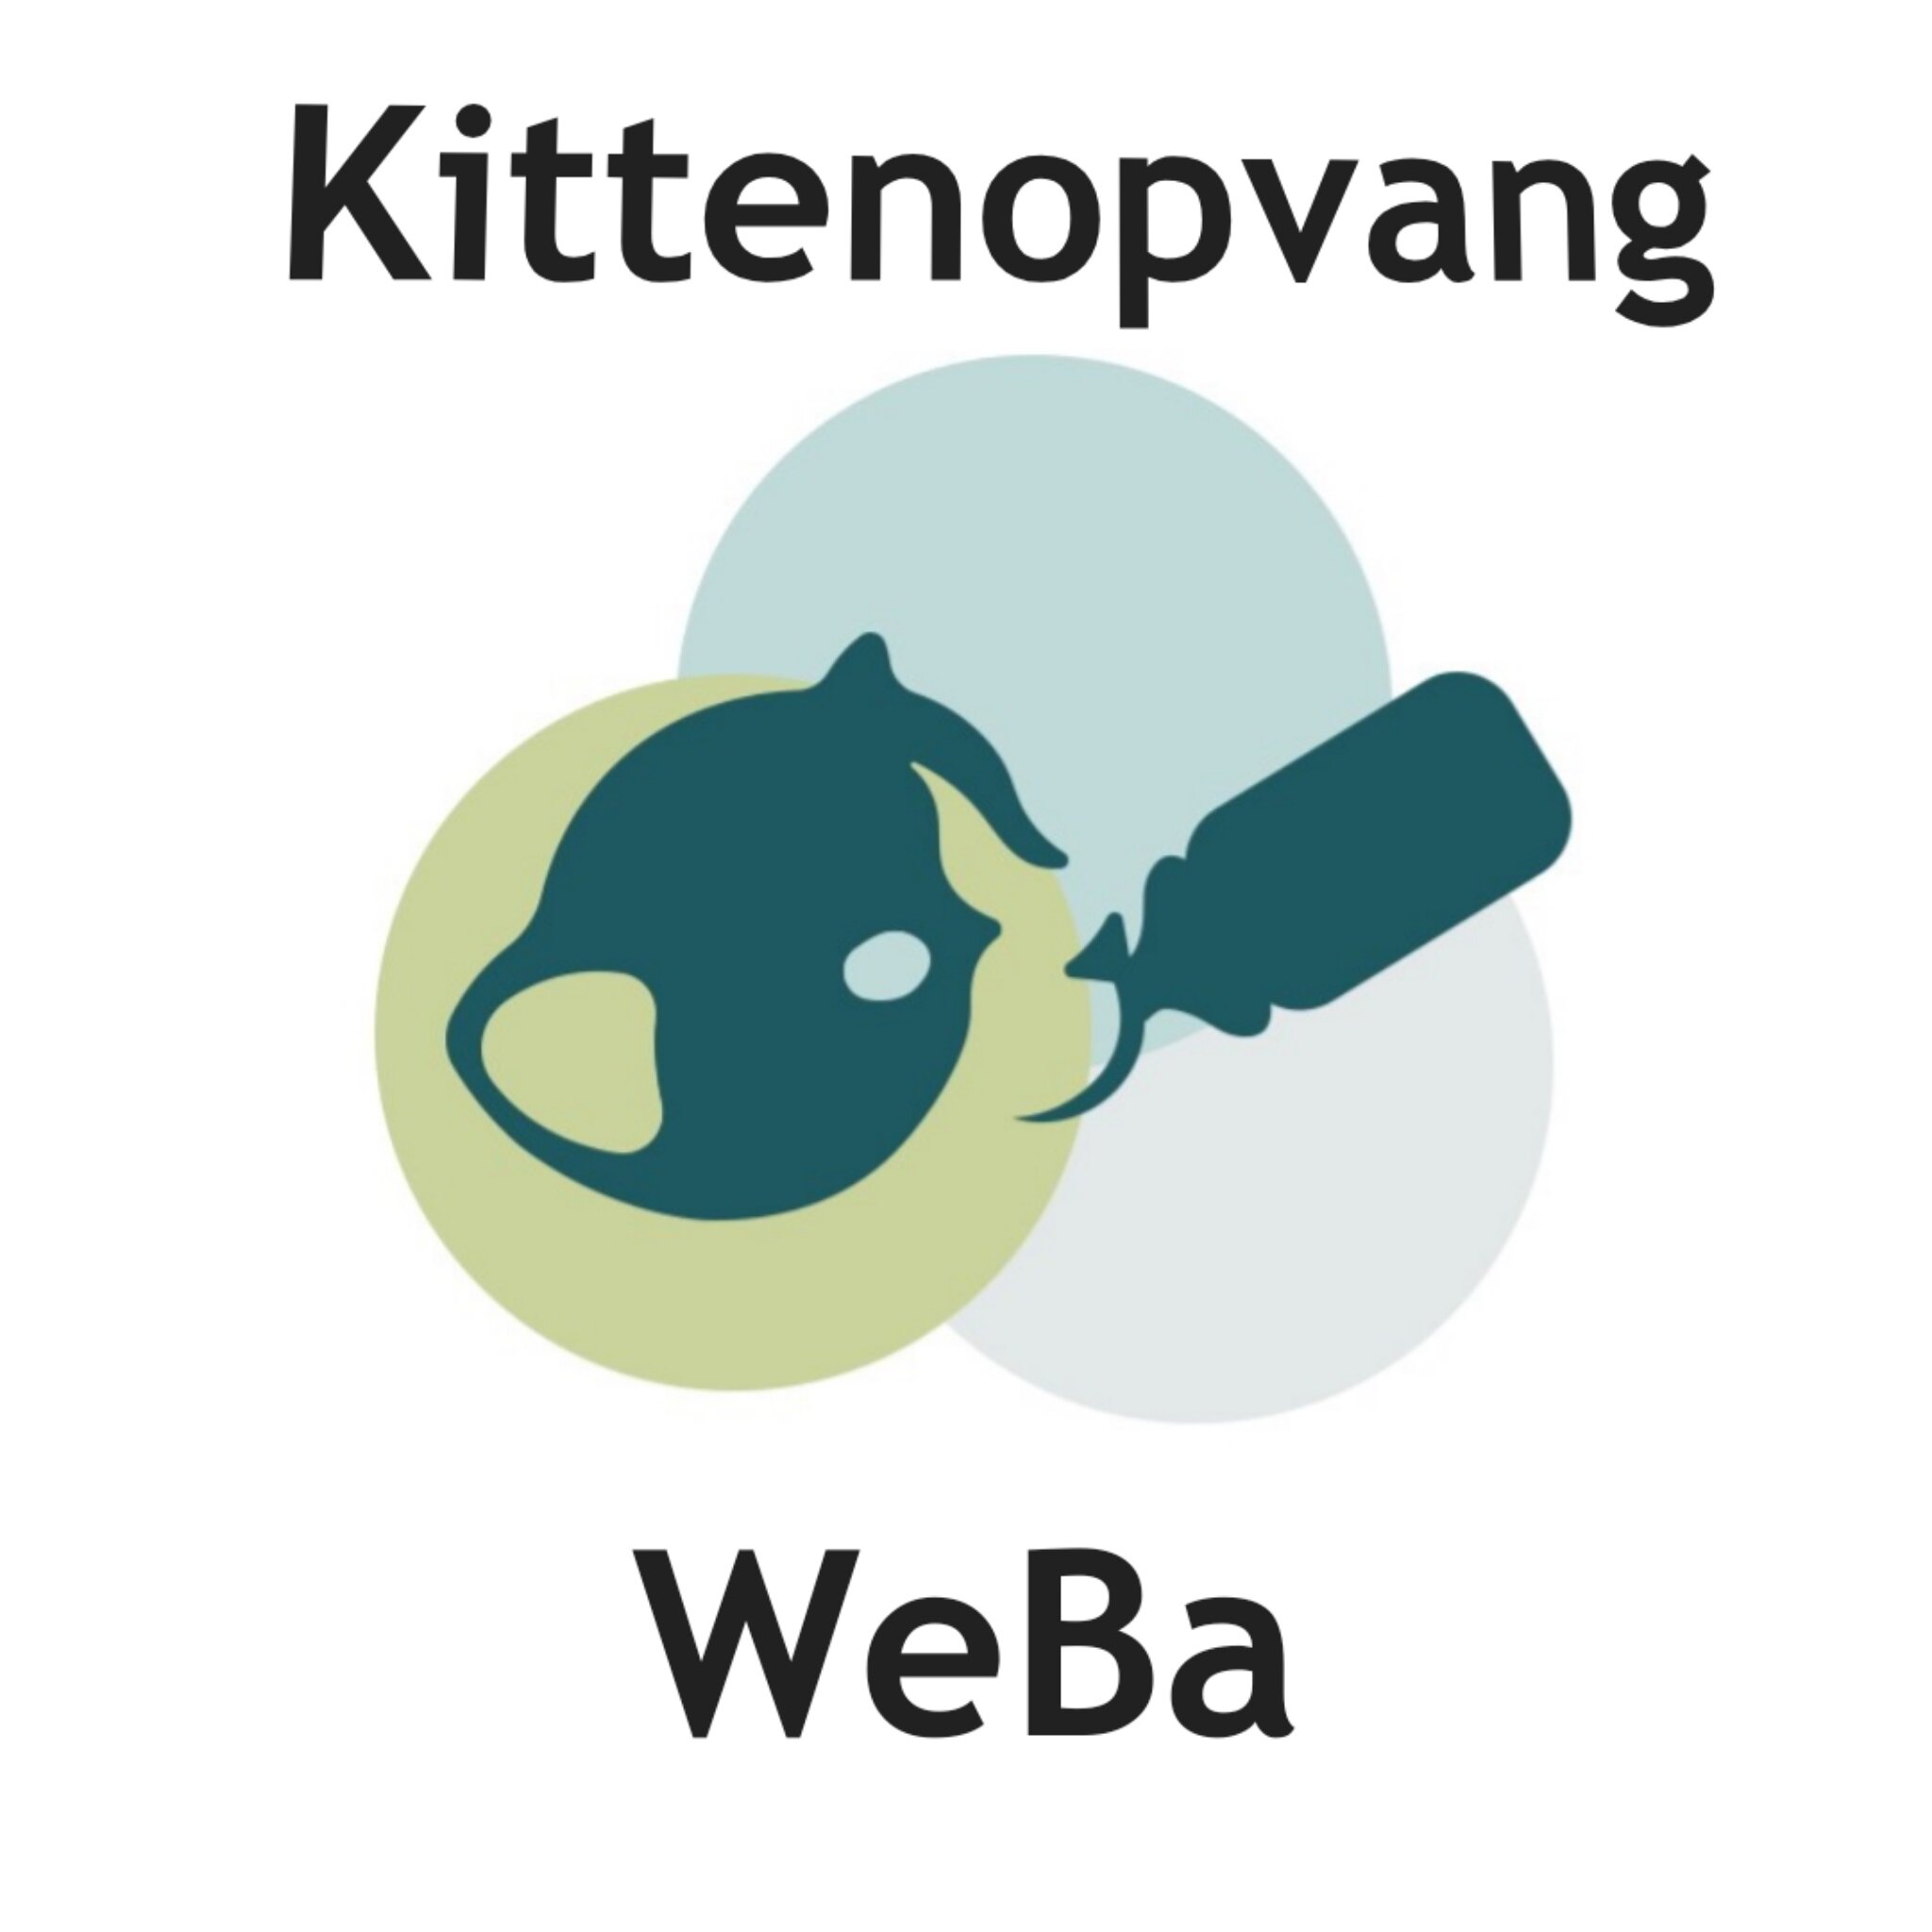 Kittenopvang WeBa